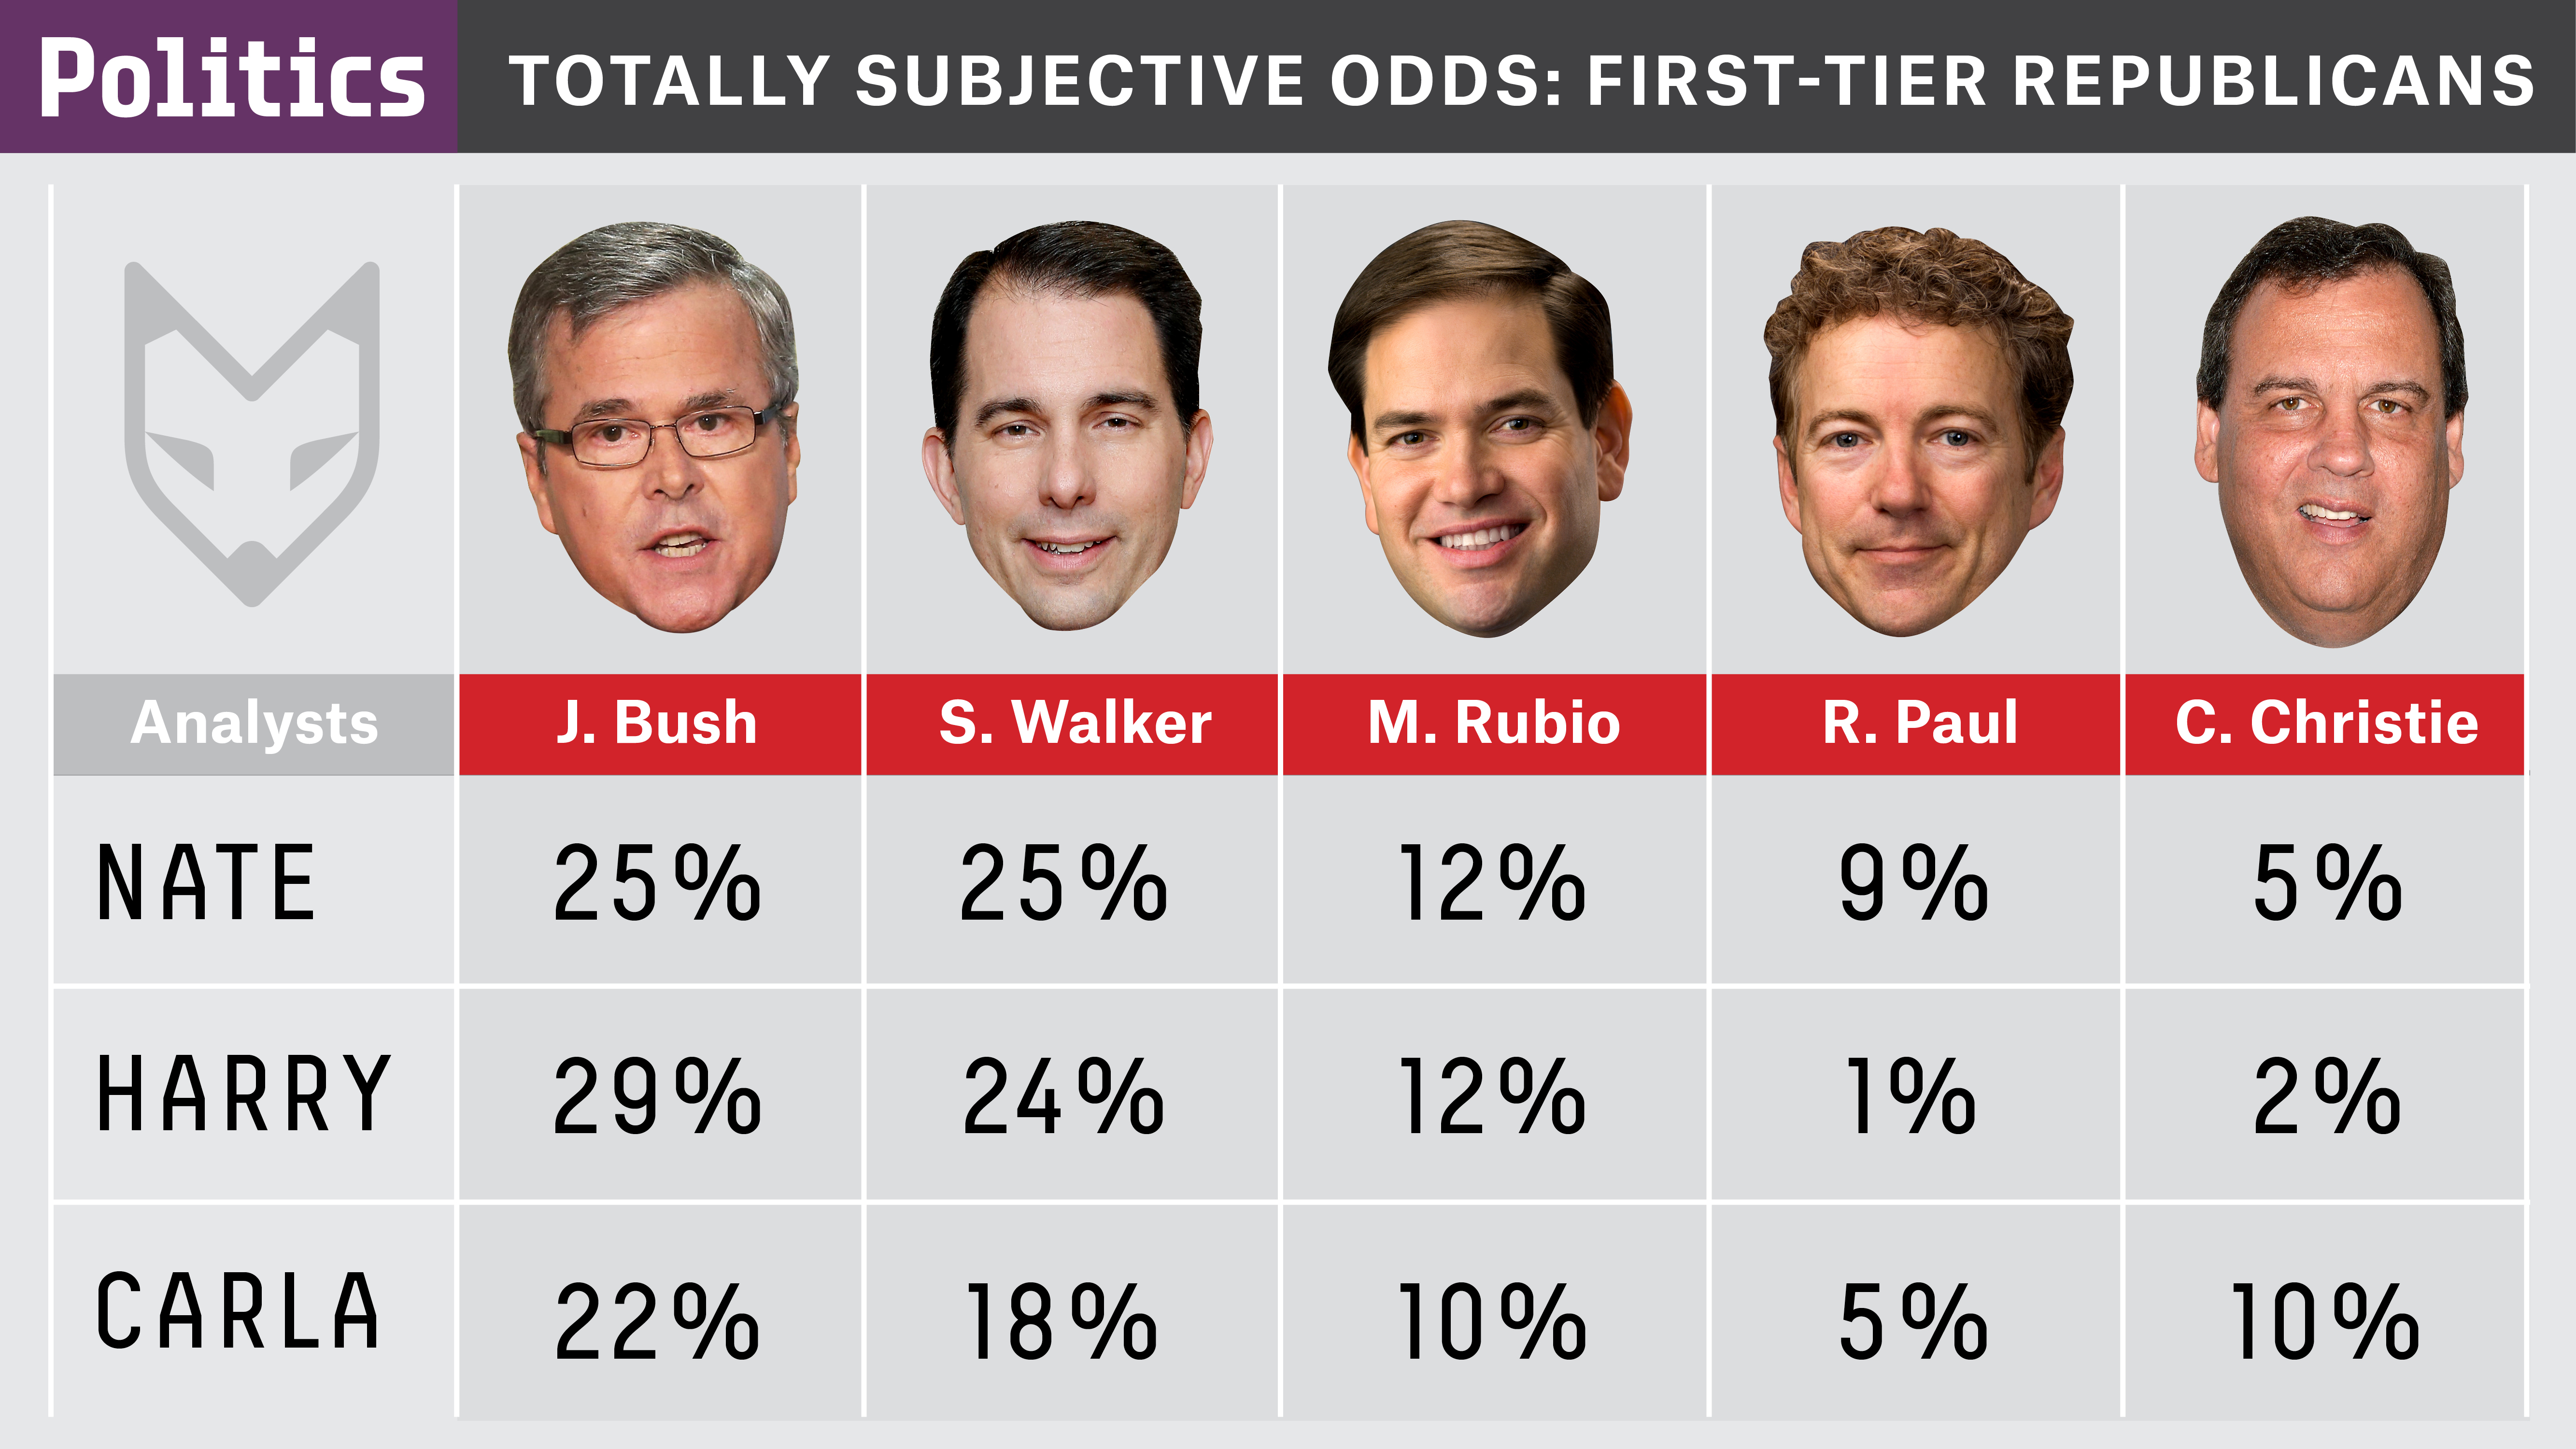 Photo: odds of presidential